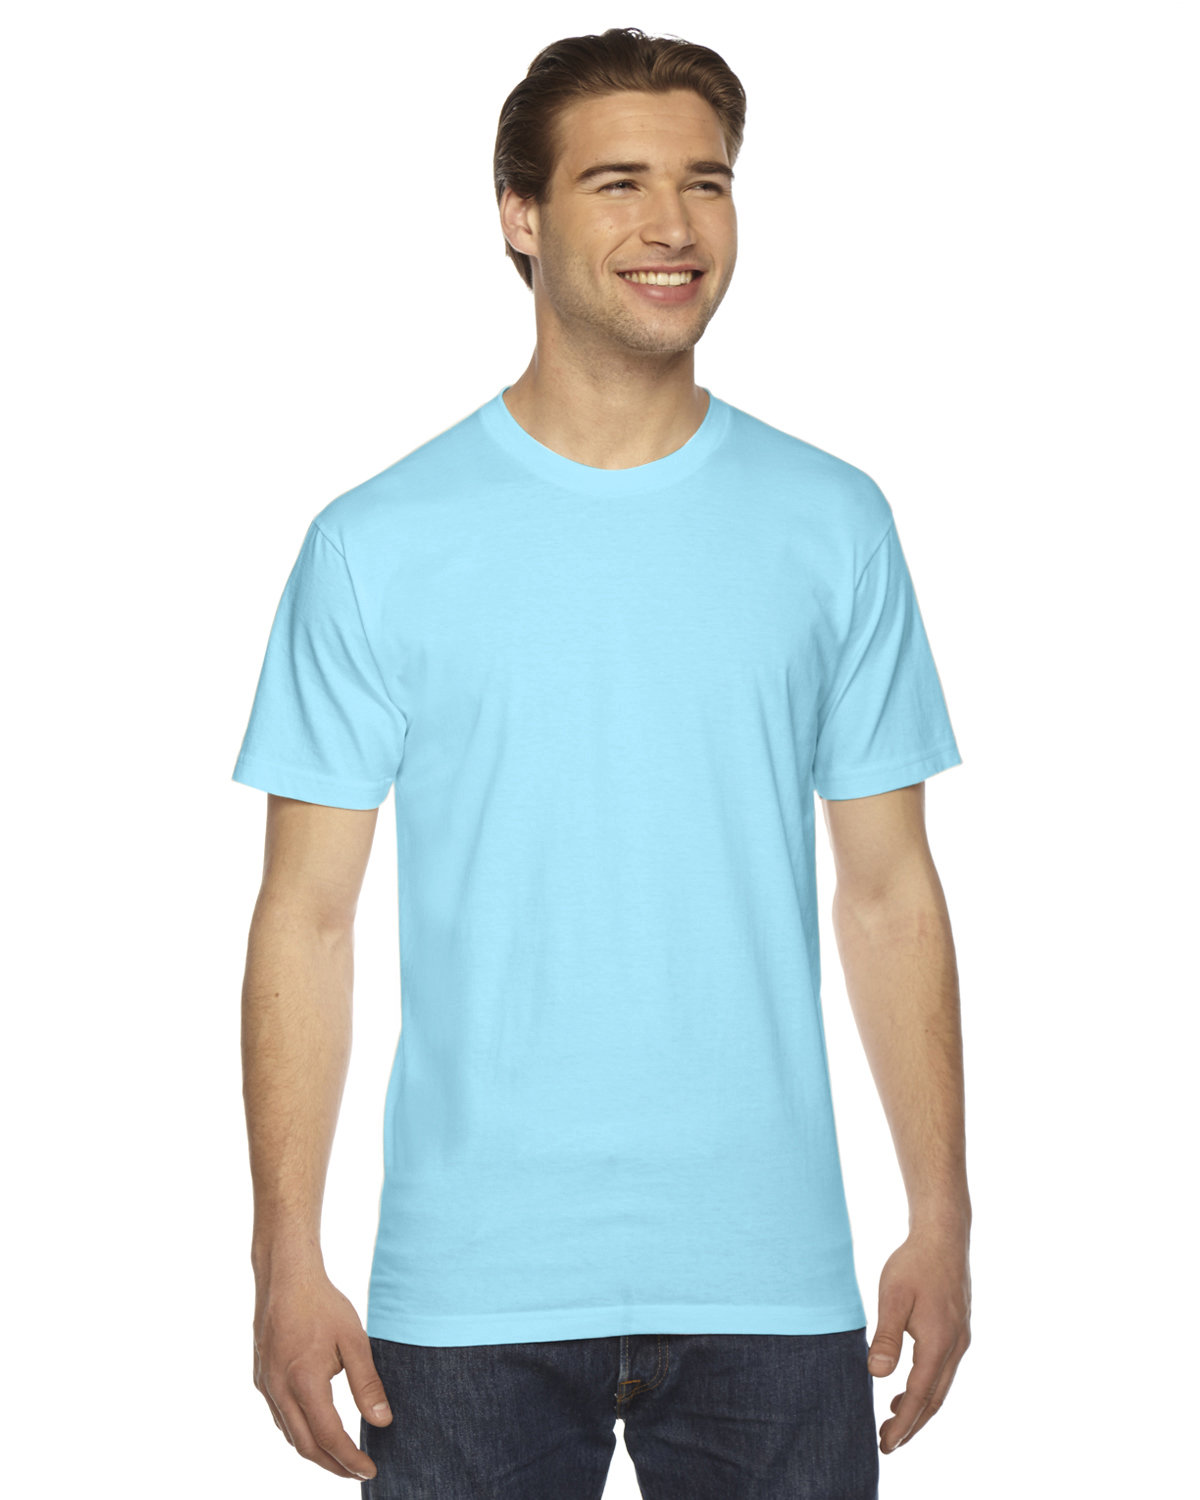 American Apparel Unisex Fine Jersey Short-Sleeve T-Shirt AQUA 